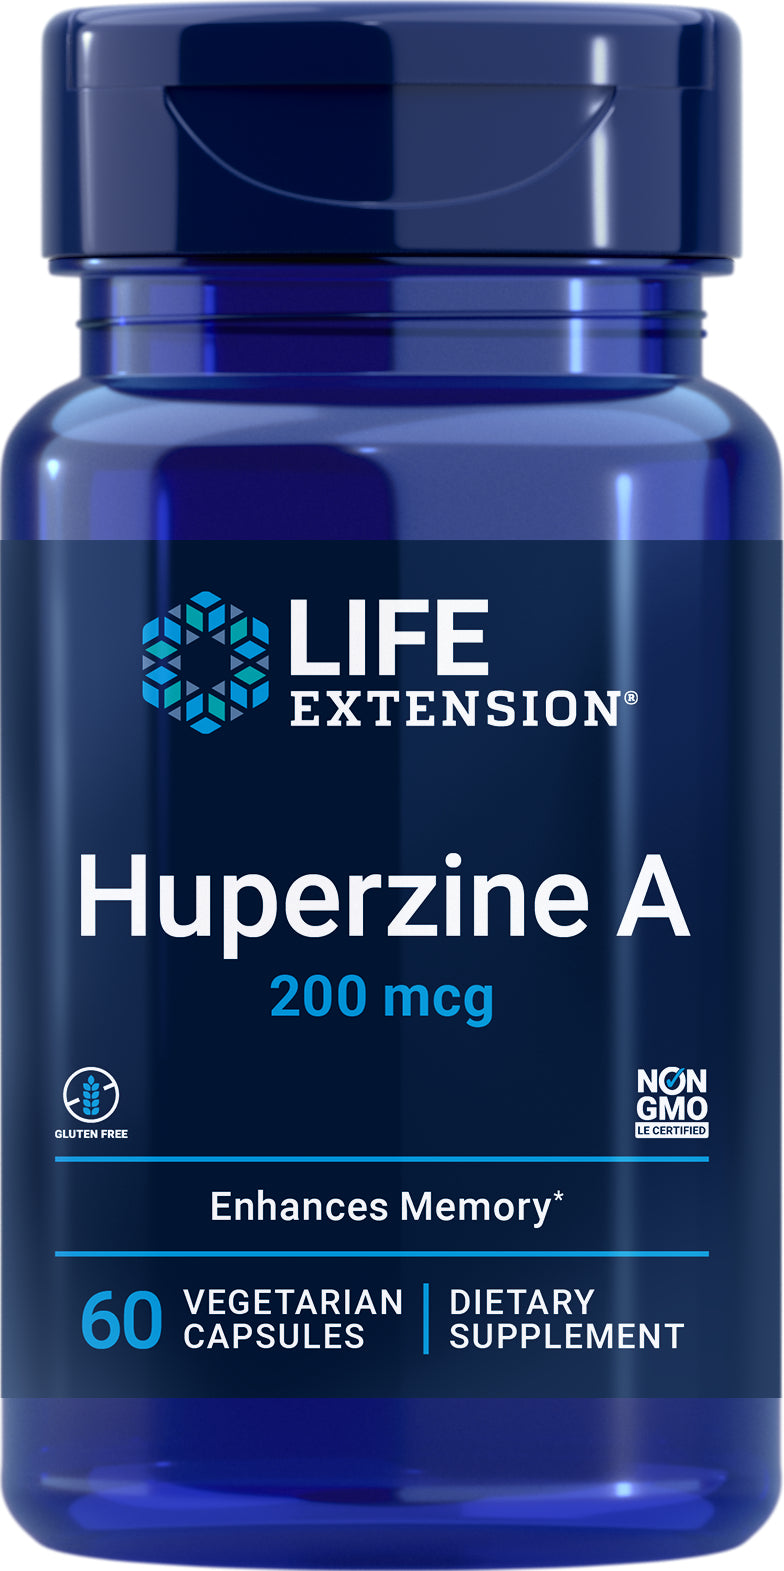 Huperzine A 200 mcg, 60 veg caps by Life Extension